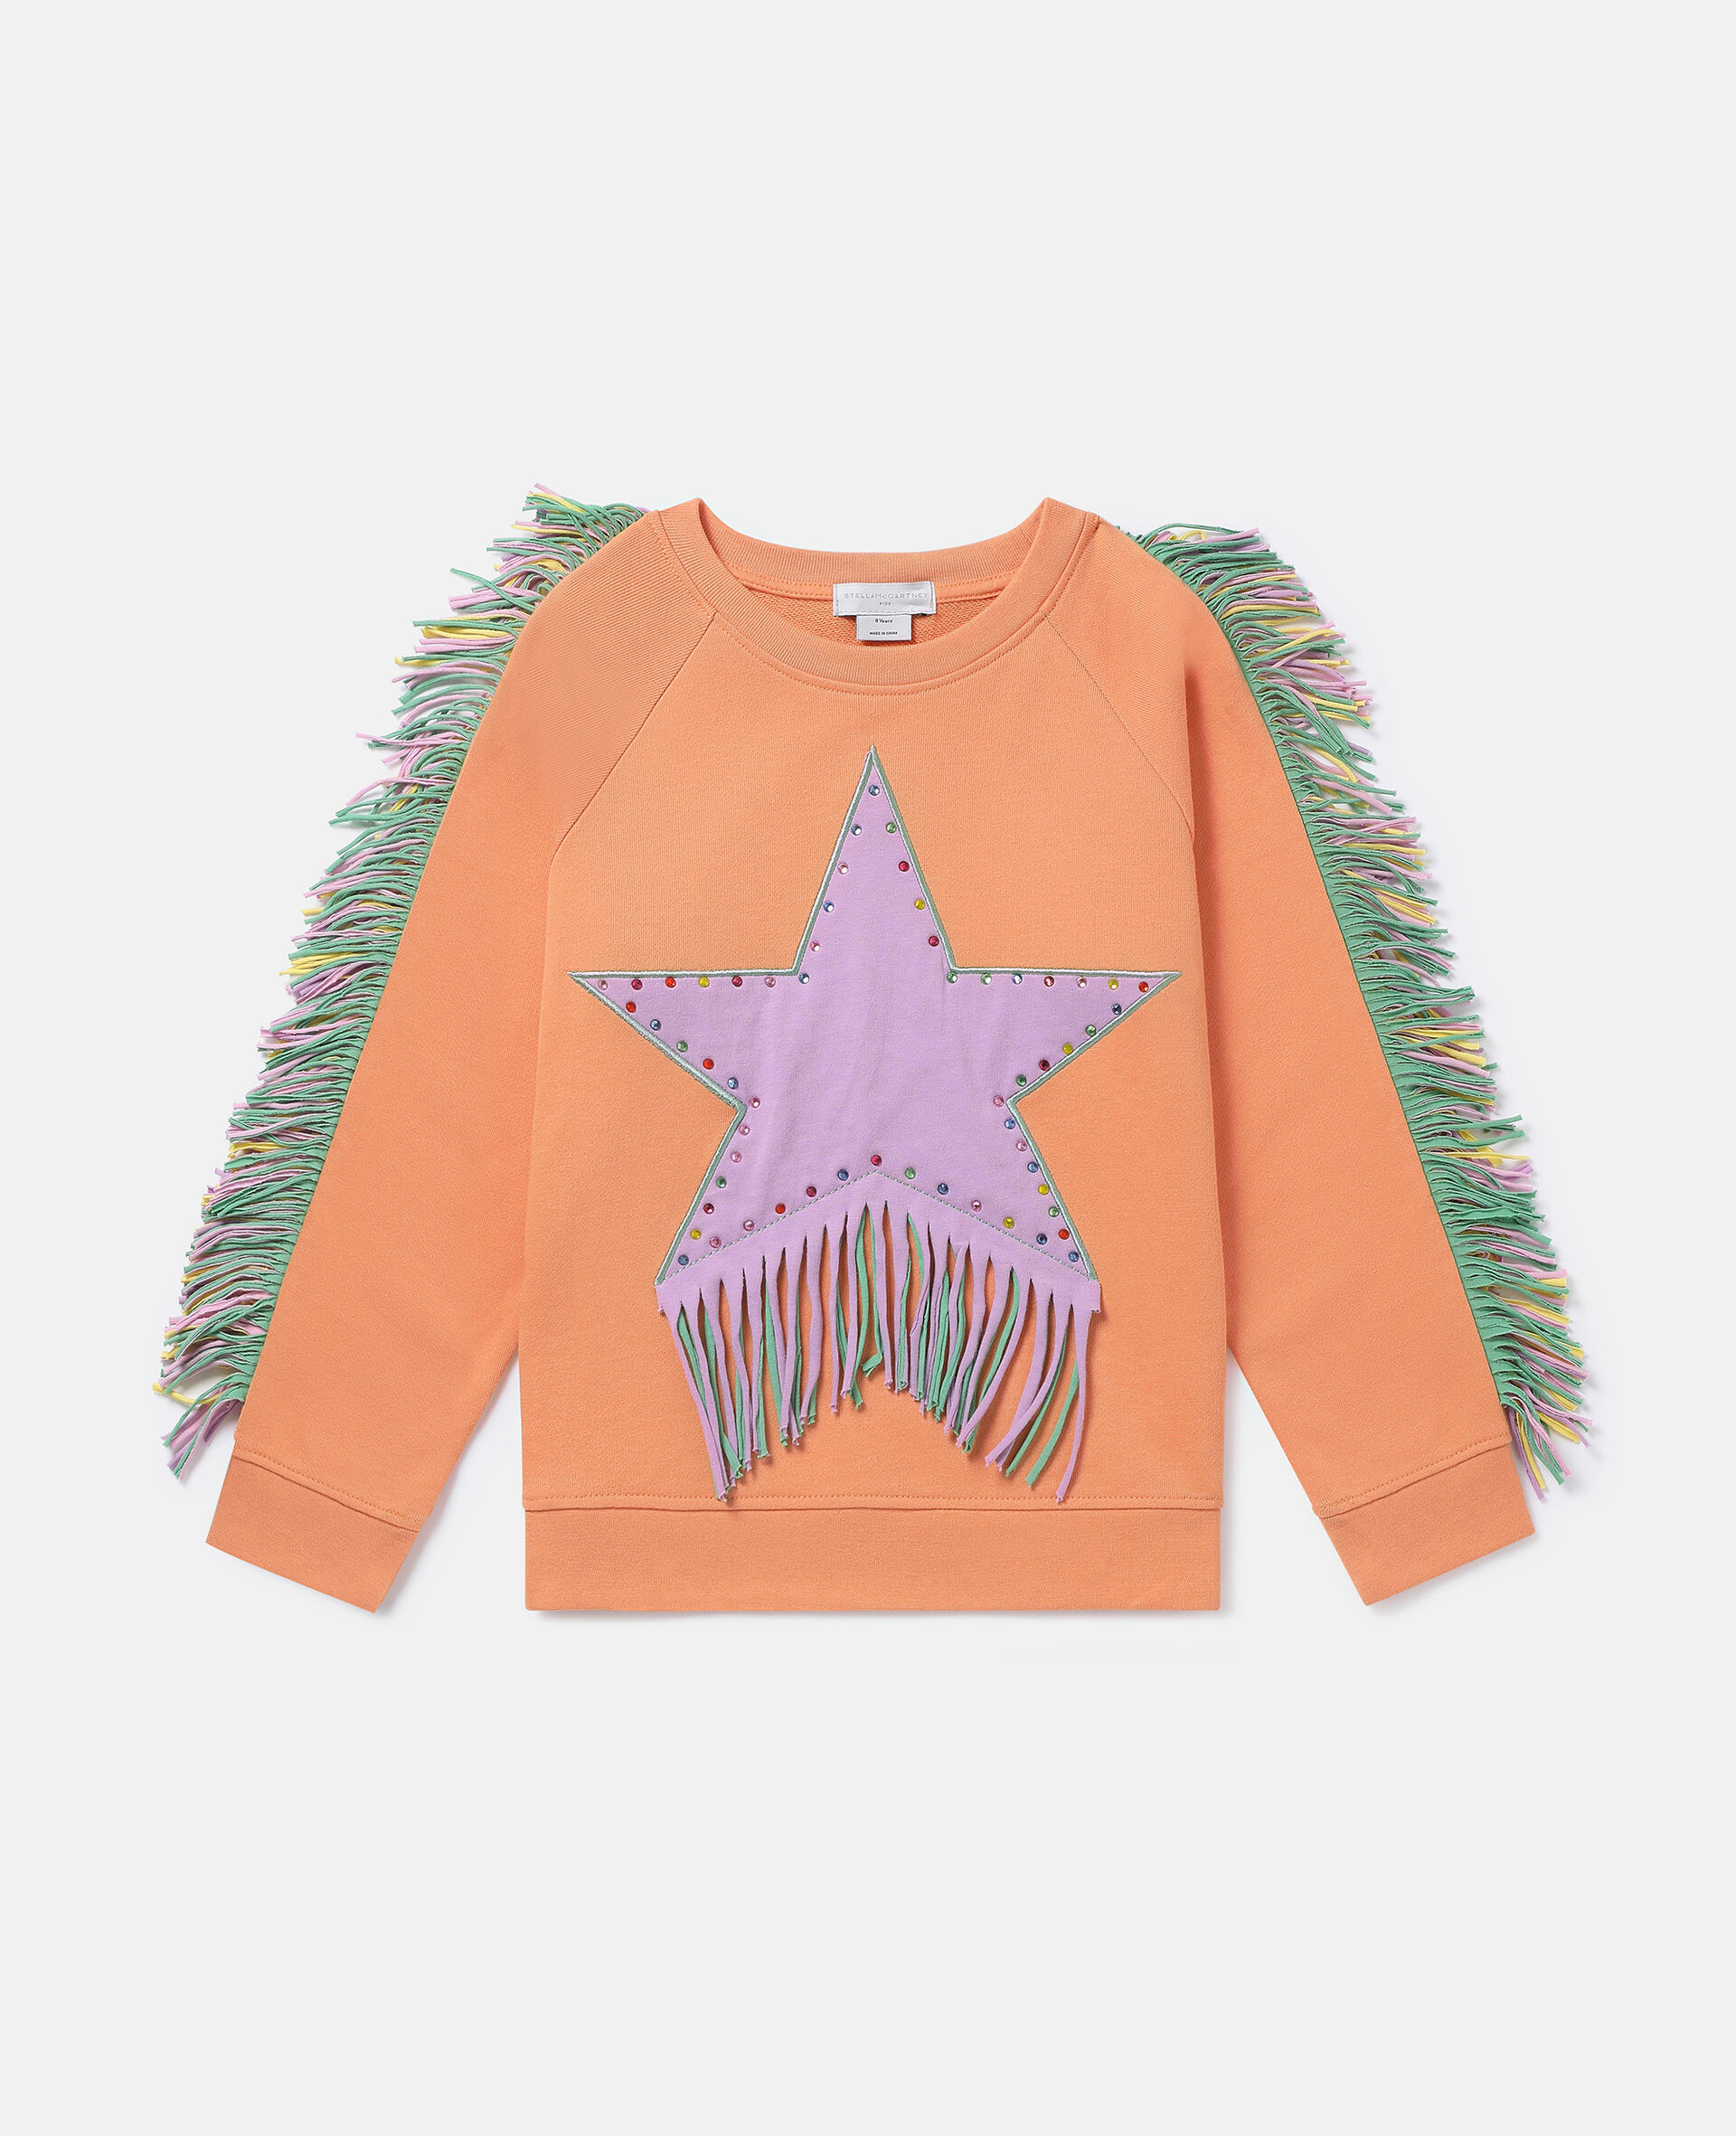 Fringed Star Sweatshirt-Orange-medium